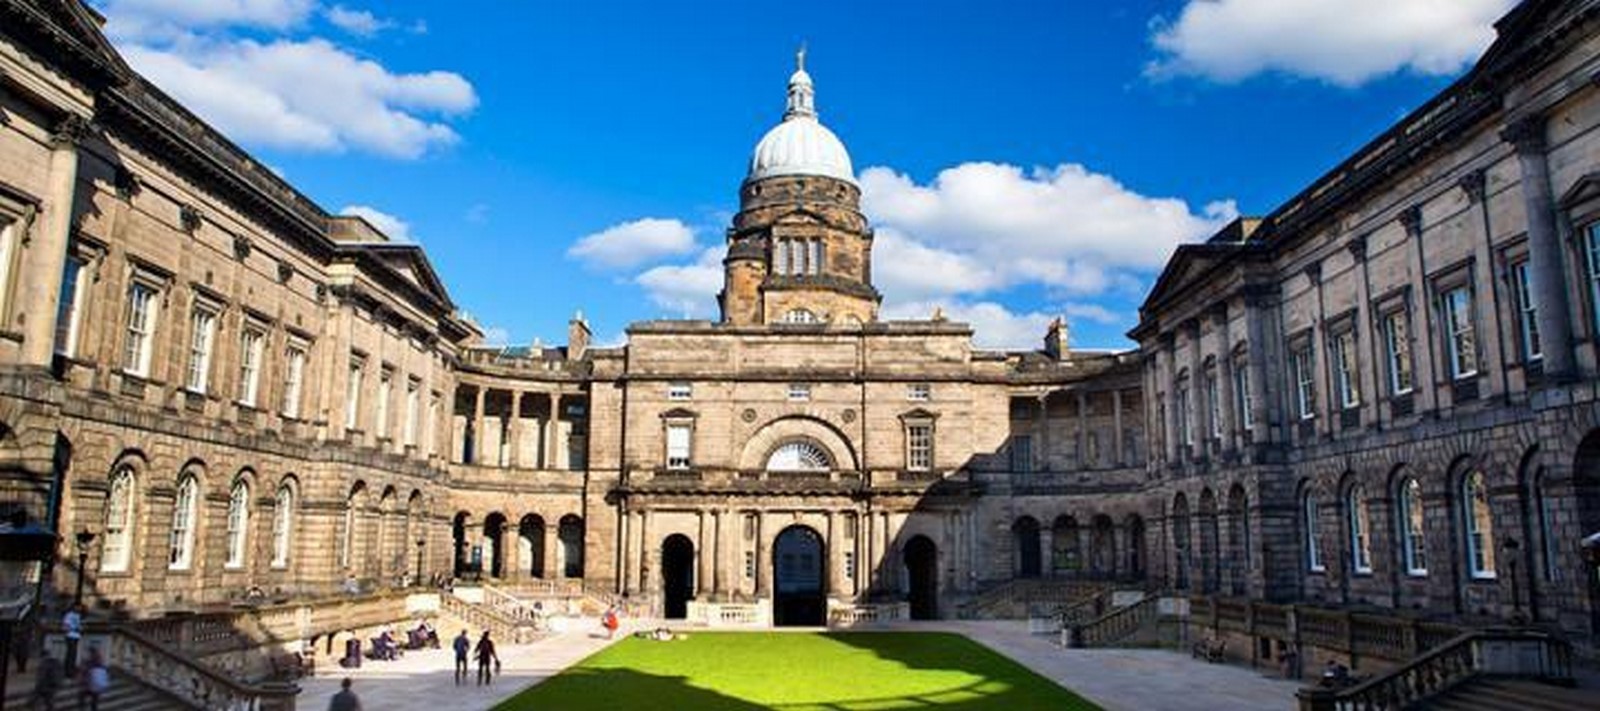 The University Of Edinburgh - Sheet1